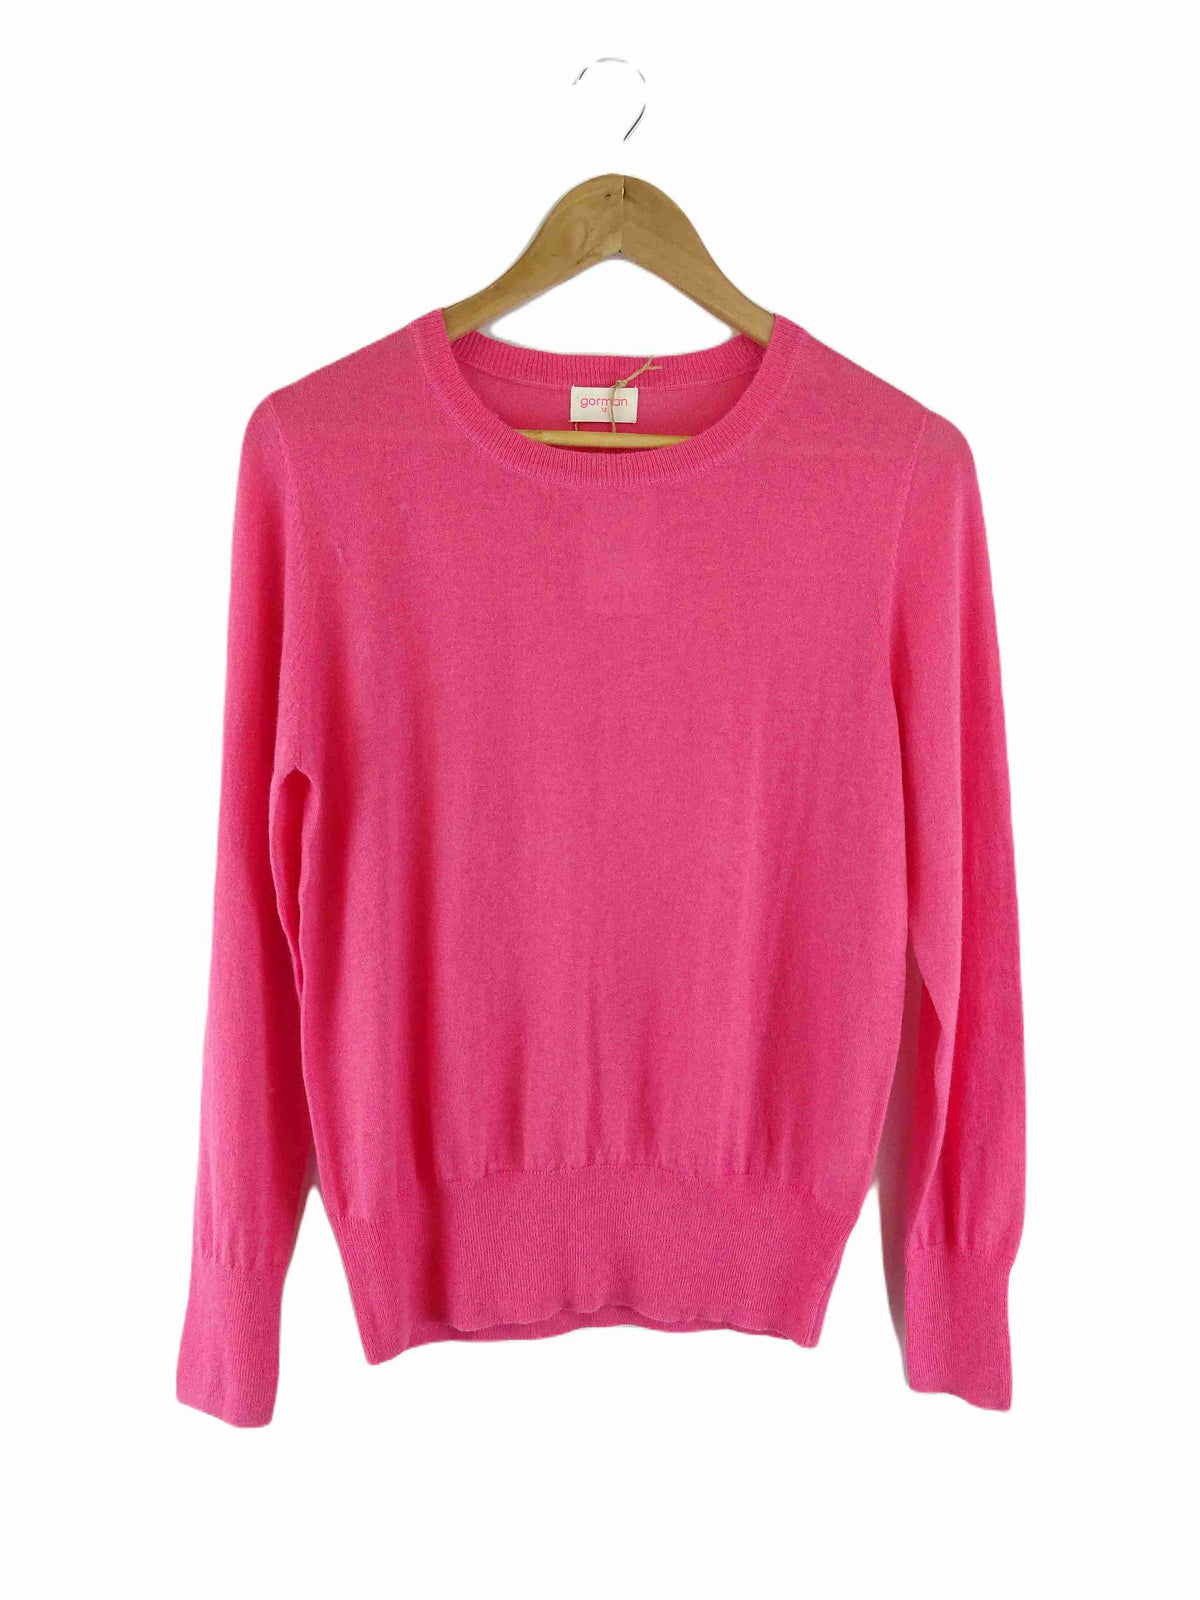 Gorman Pink Knit Sweater 12